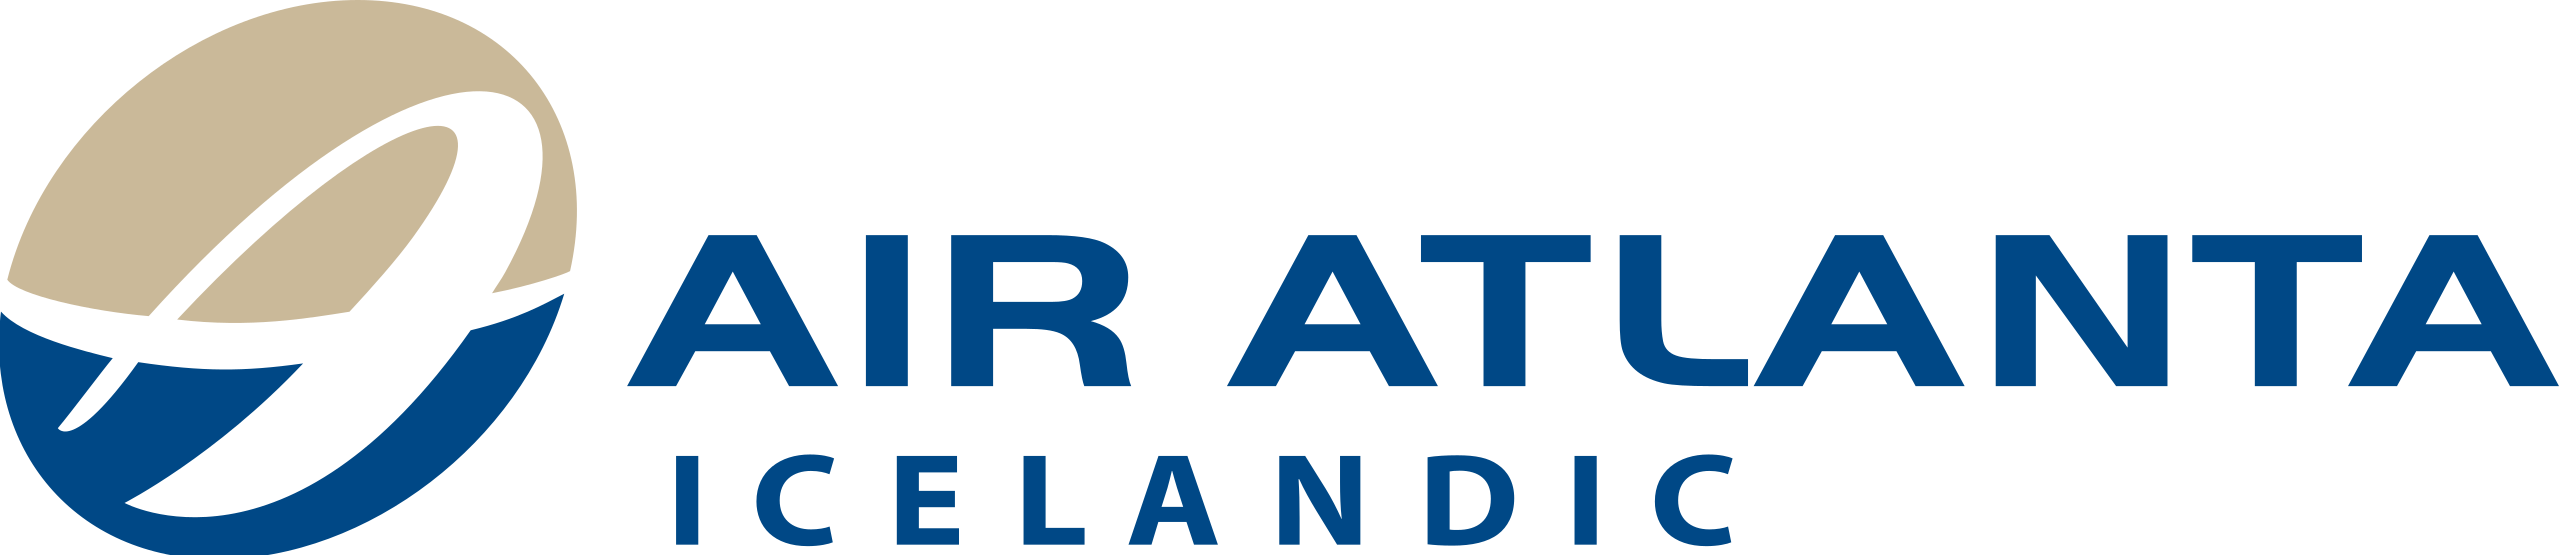 cropped cropped cropped 2560px Air Atlanta Icelandic Logo.svg 